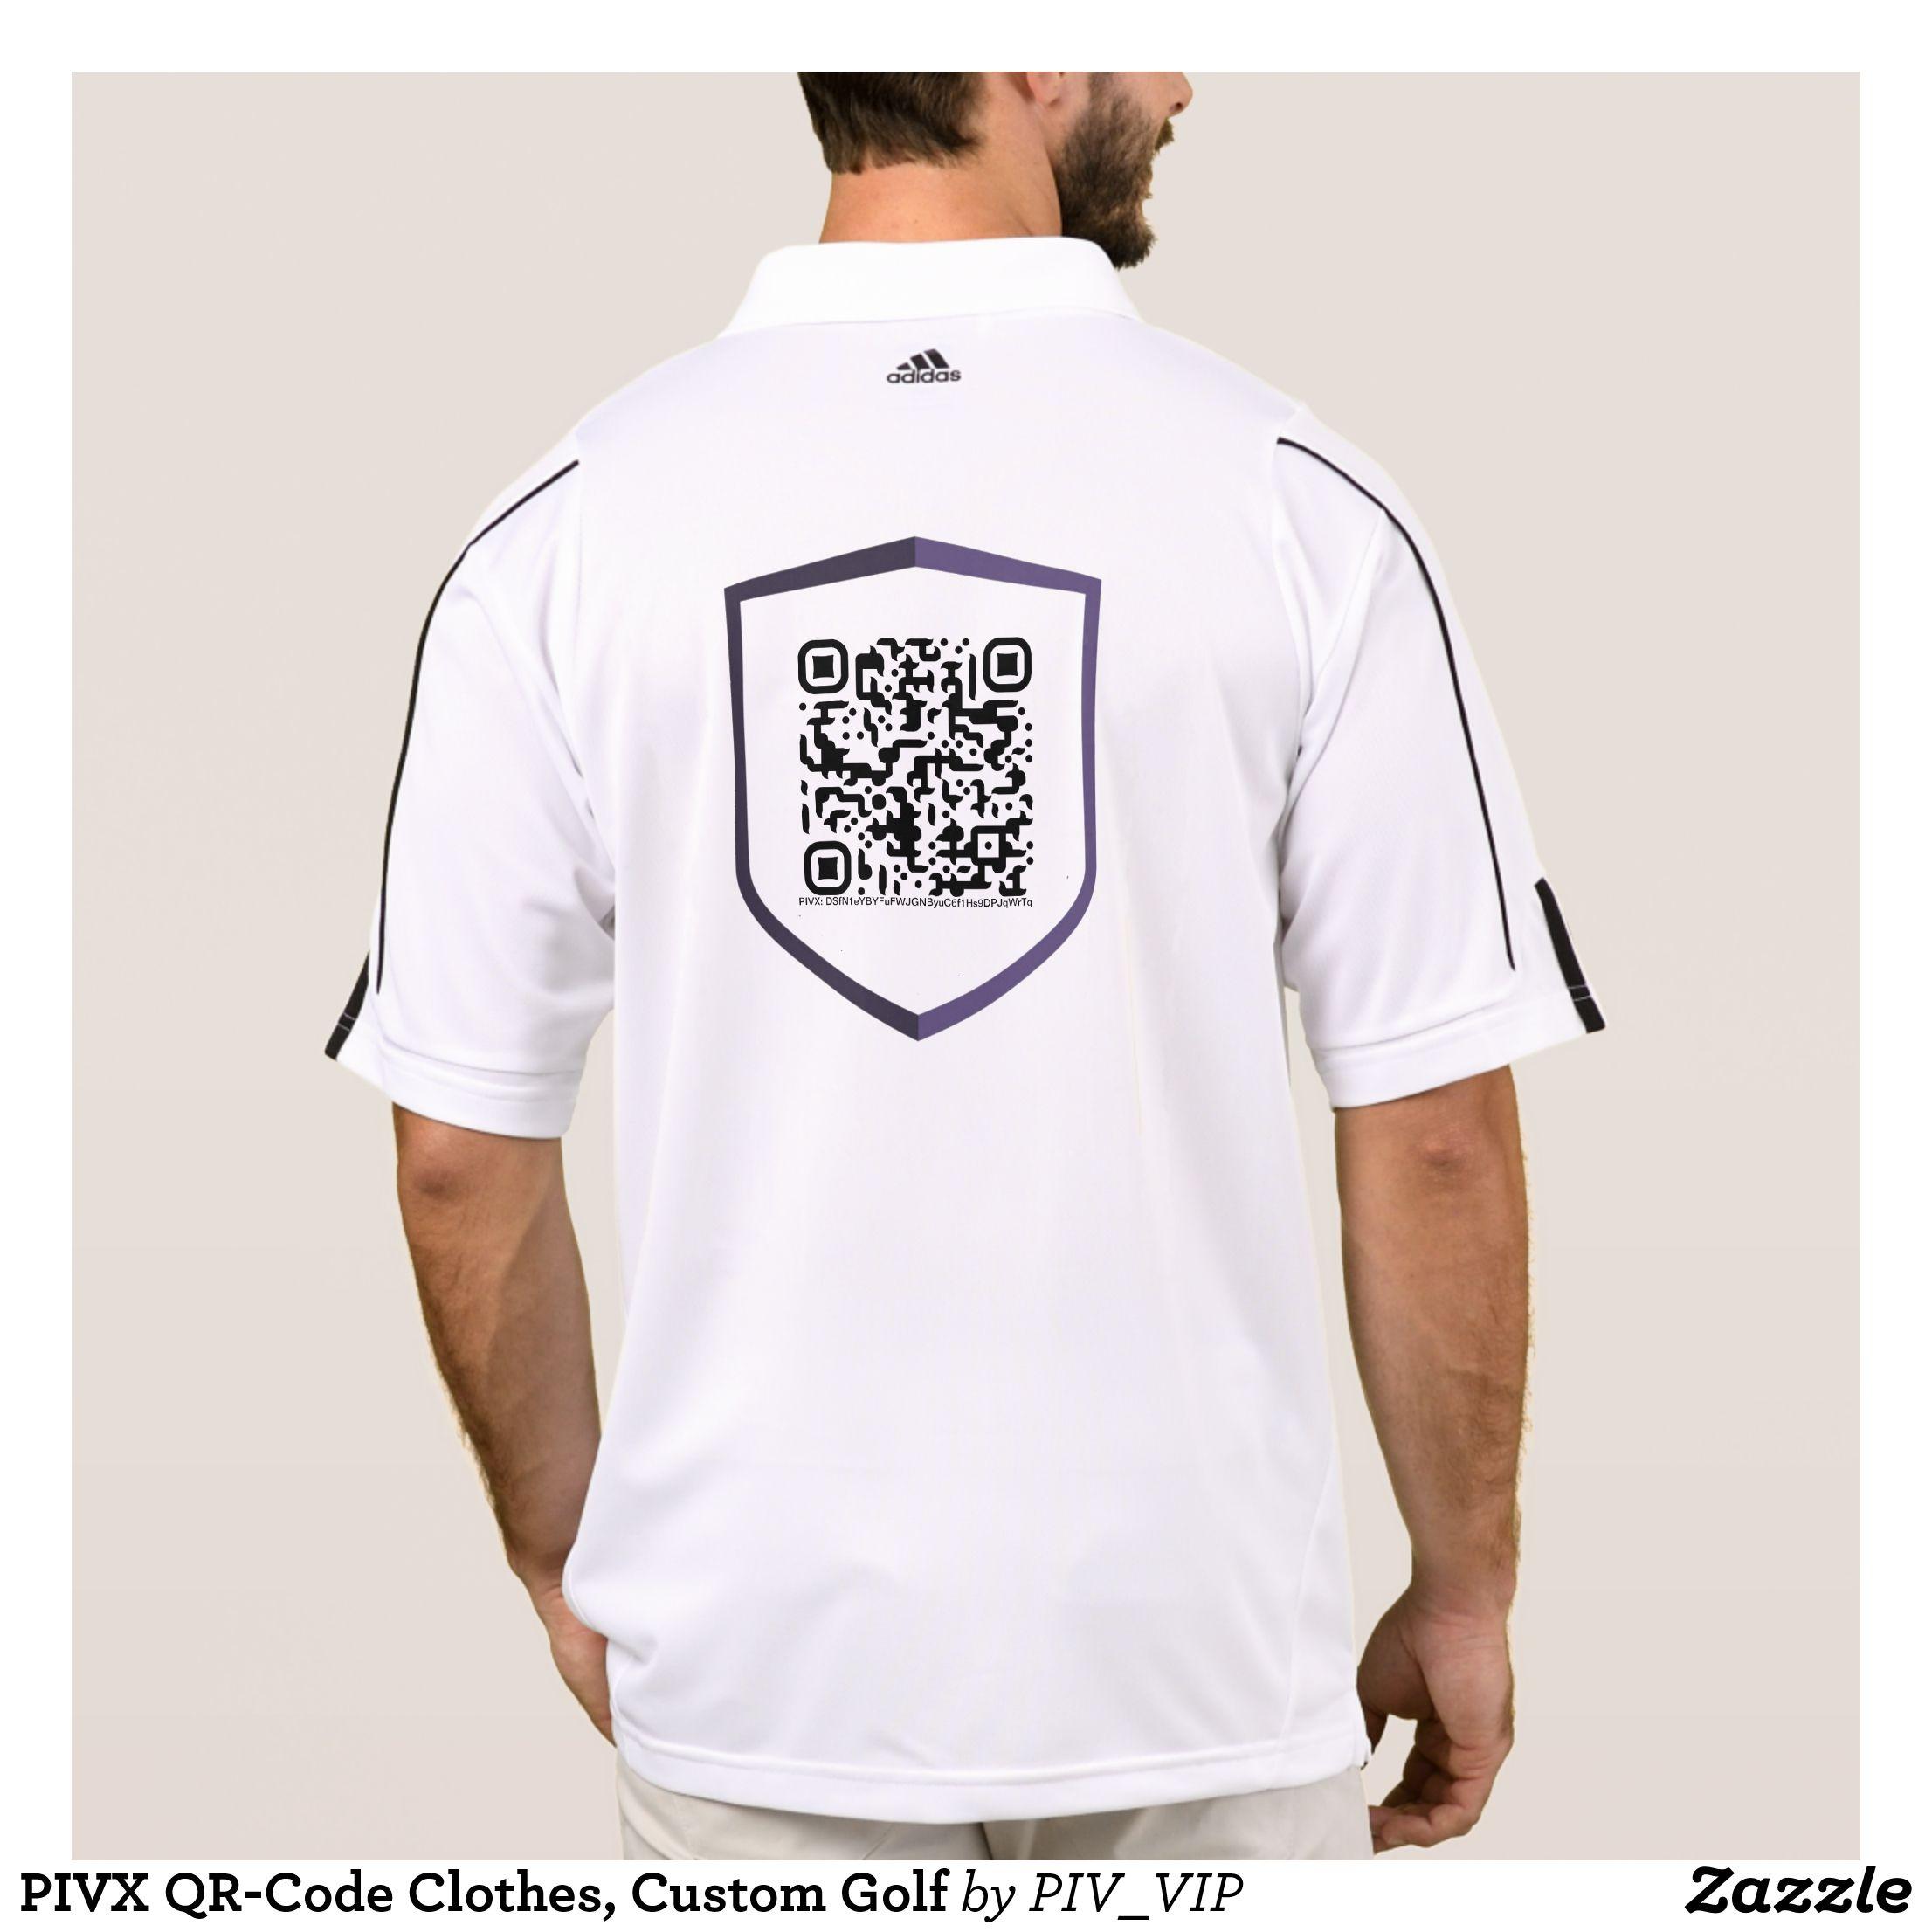 QR Clothing and Apparel Logo - PIVX QR-Clothes, Color Shield, Colar Polo Shirt | MEN'S POLO SHIRTS ...